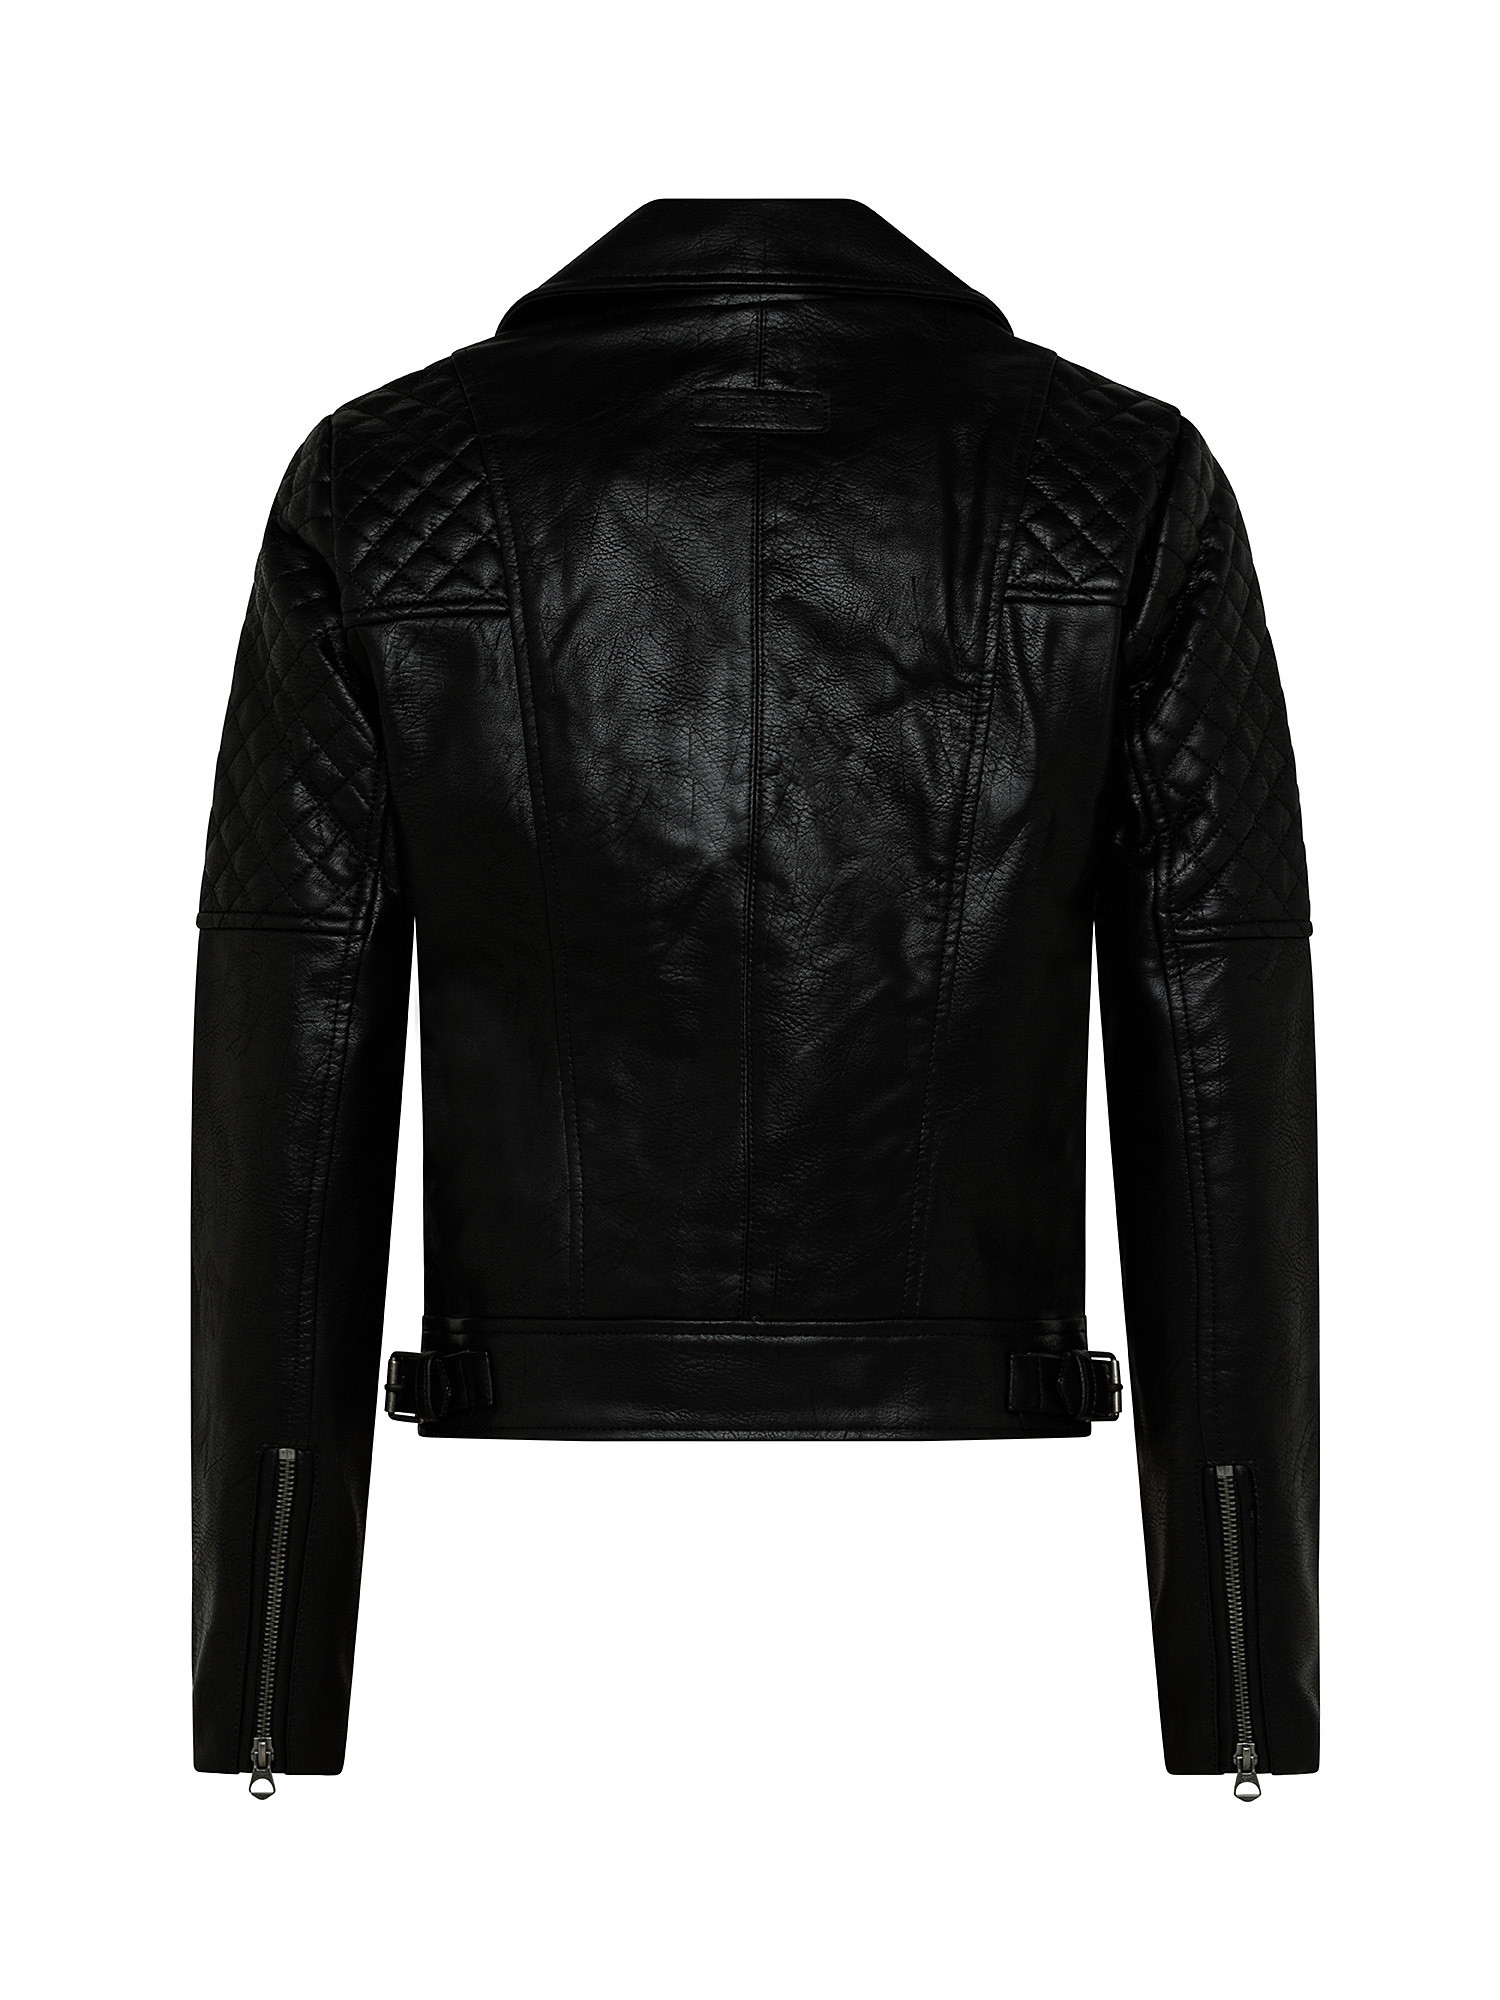 Astrid turn-up collar motorcycle jacket, Black, large image number 1